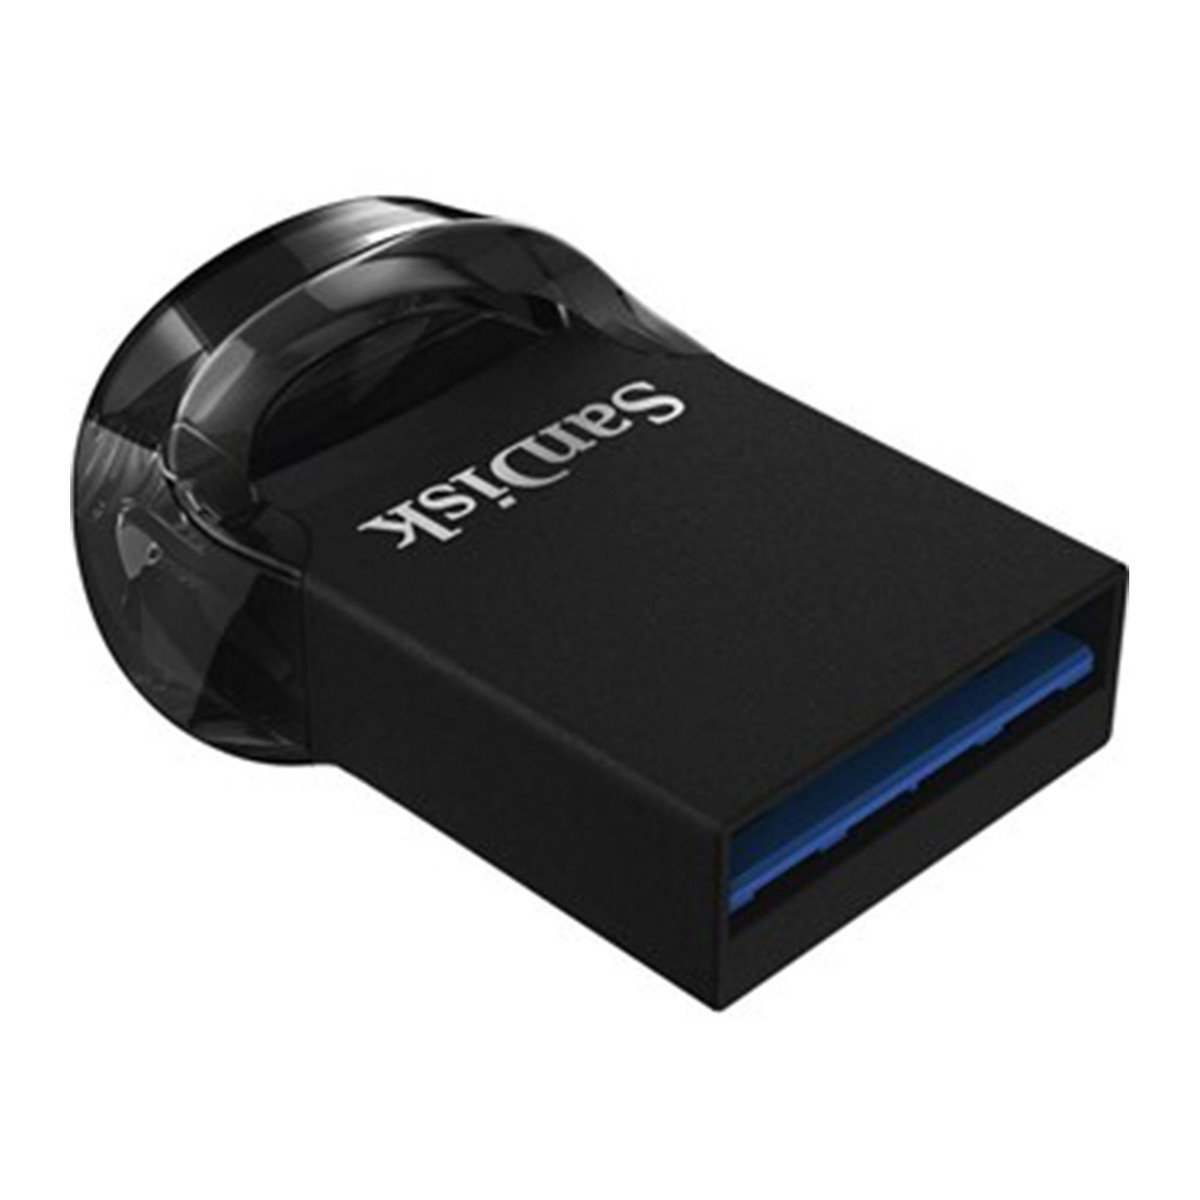 SanDisk Flash Drive SDCZ430-032G 32GB